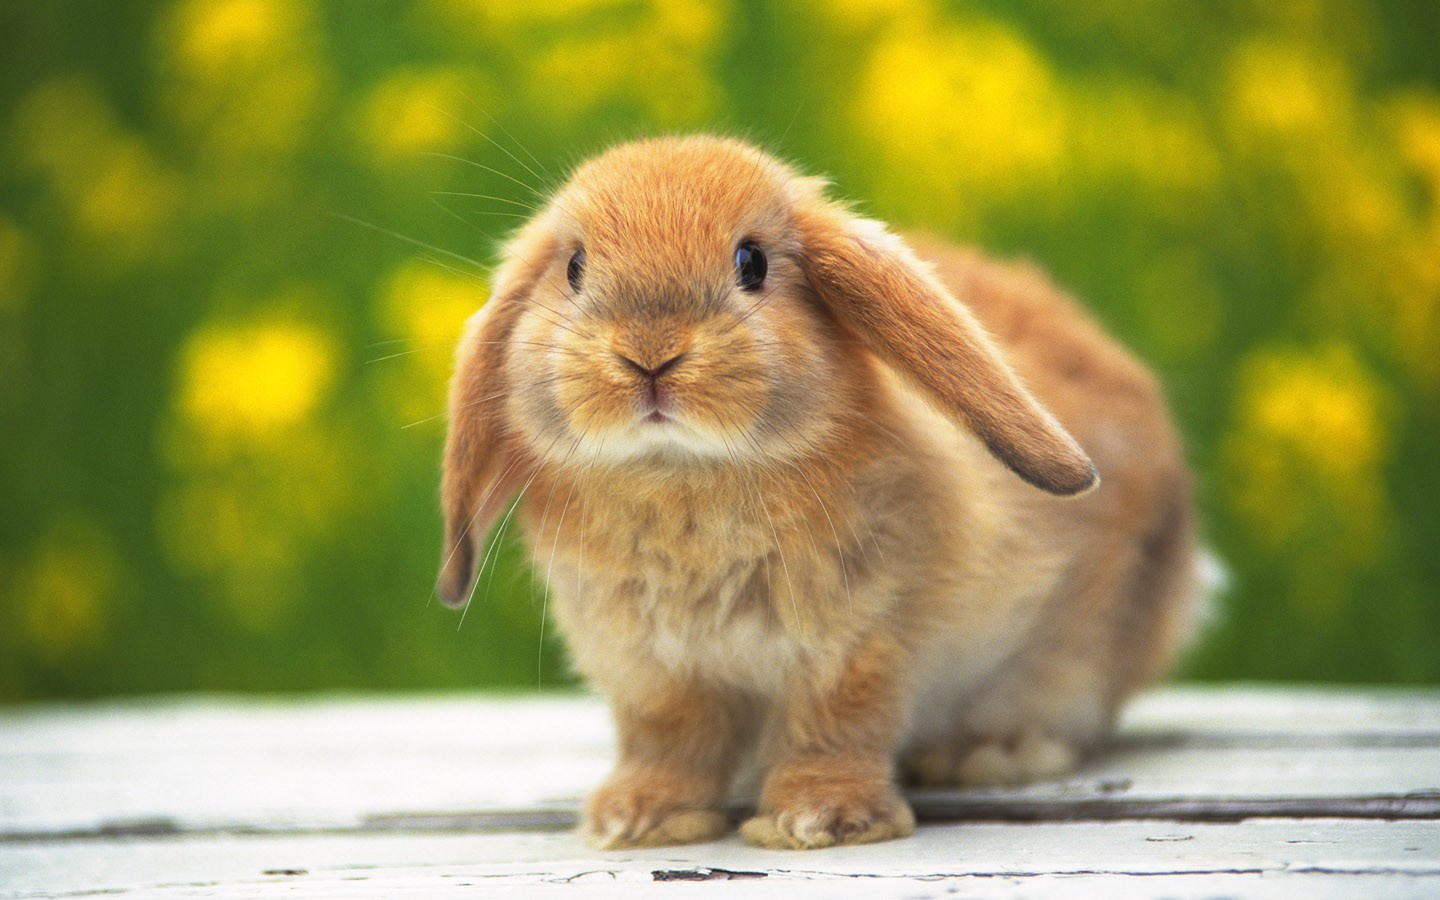 Cute Rabbit Widescreen Desktop Wallpaper And Stock Photos